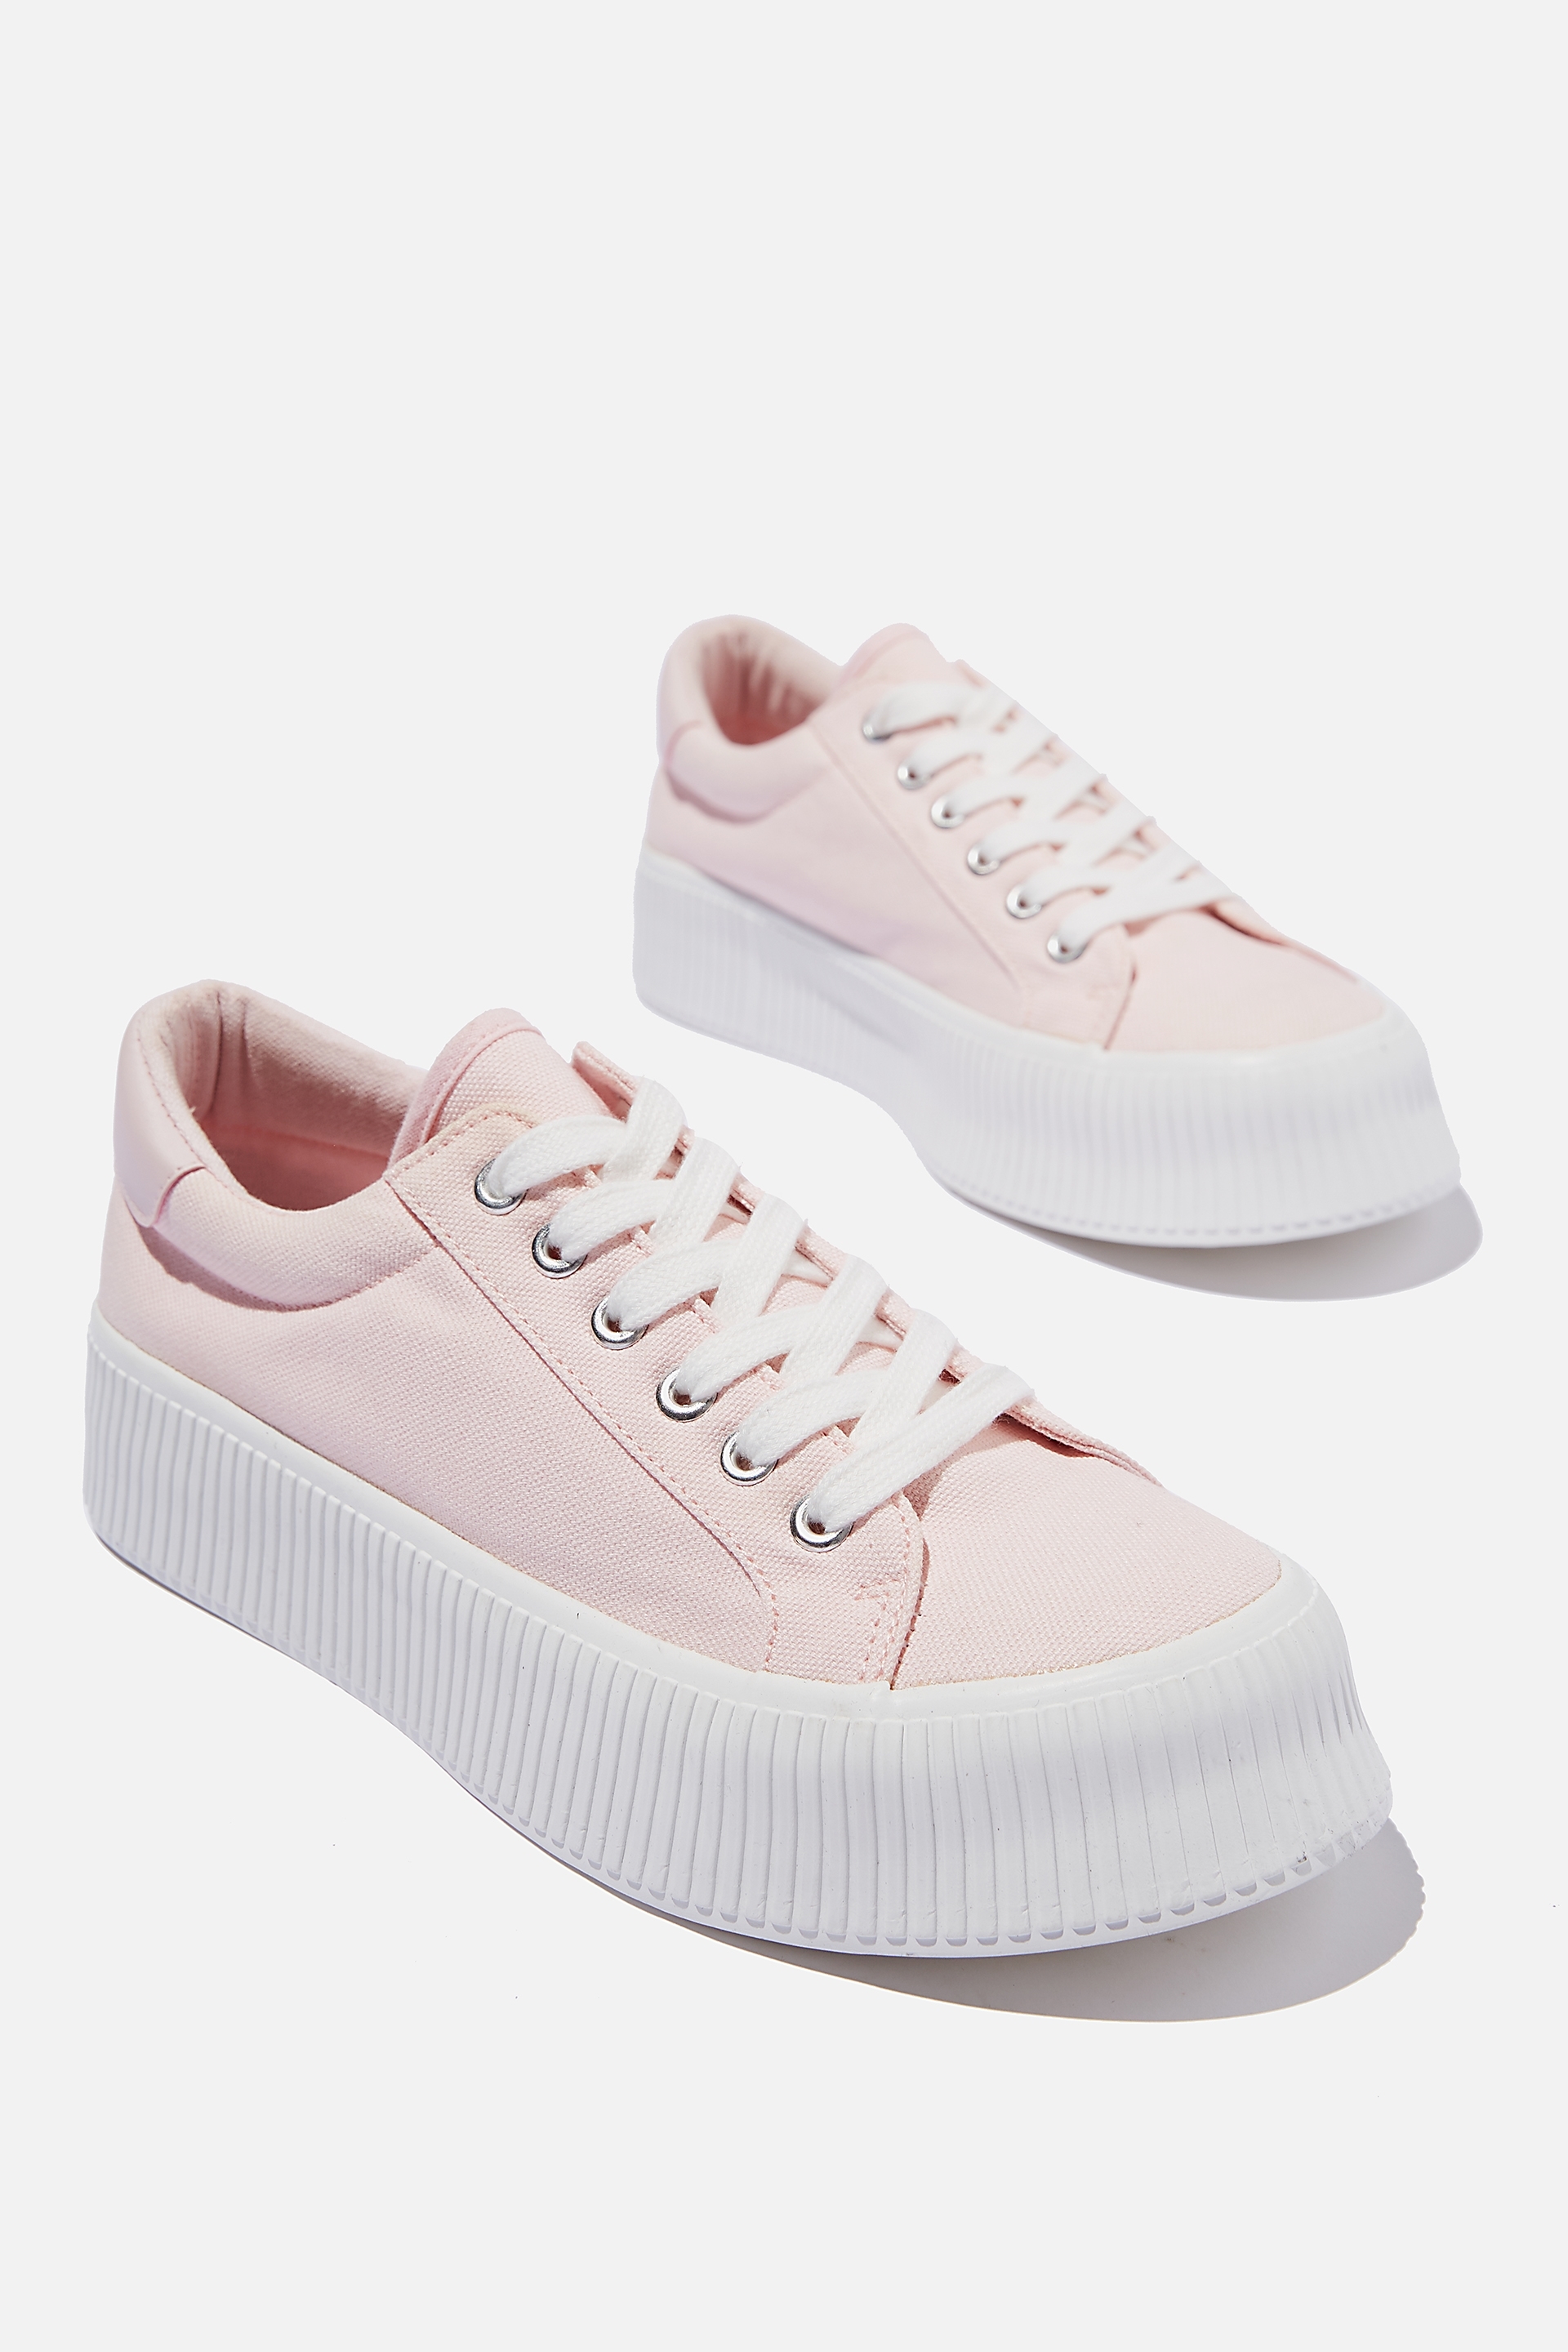 Rubi - Whitney Rib Platform Sneaker - Pale pink